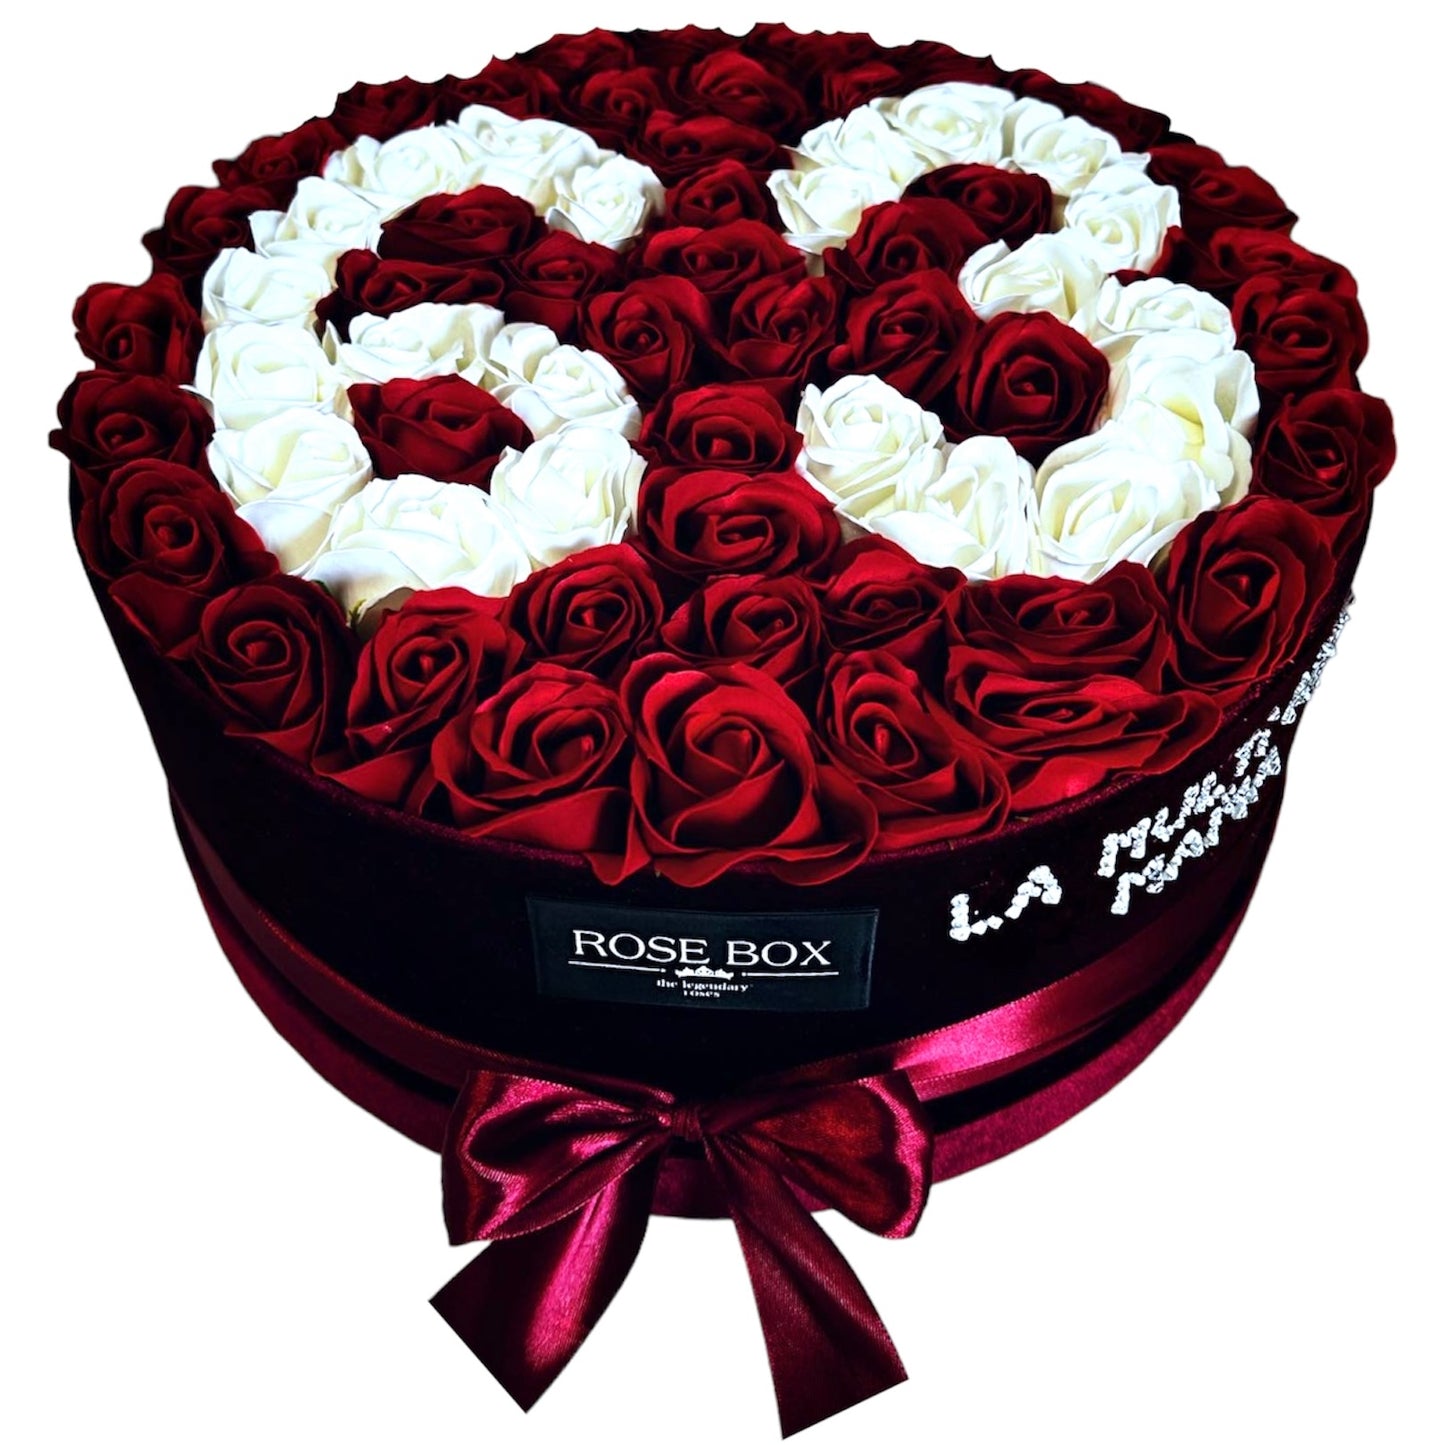 Cutie de catifea bordeaux cu 51 trandafiri roșu&alb personalizată